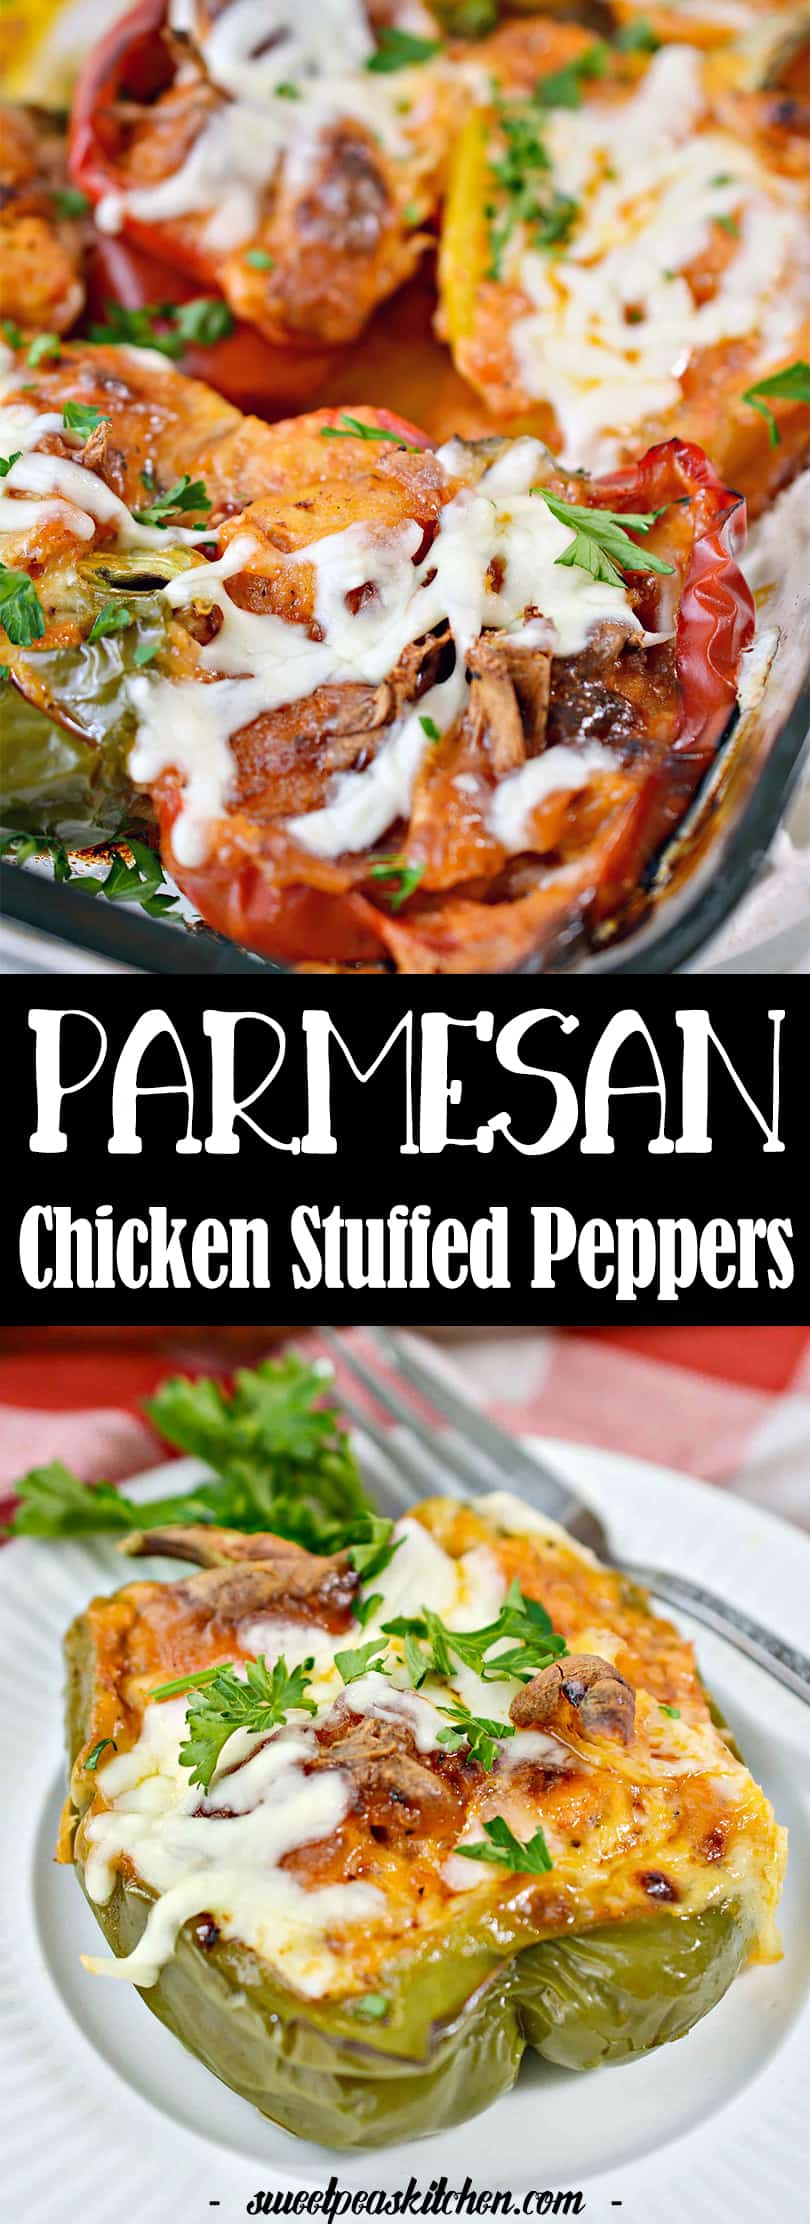 Parmesan Chicken Stuffed Peppers Recipe